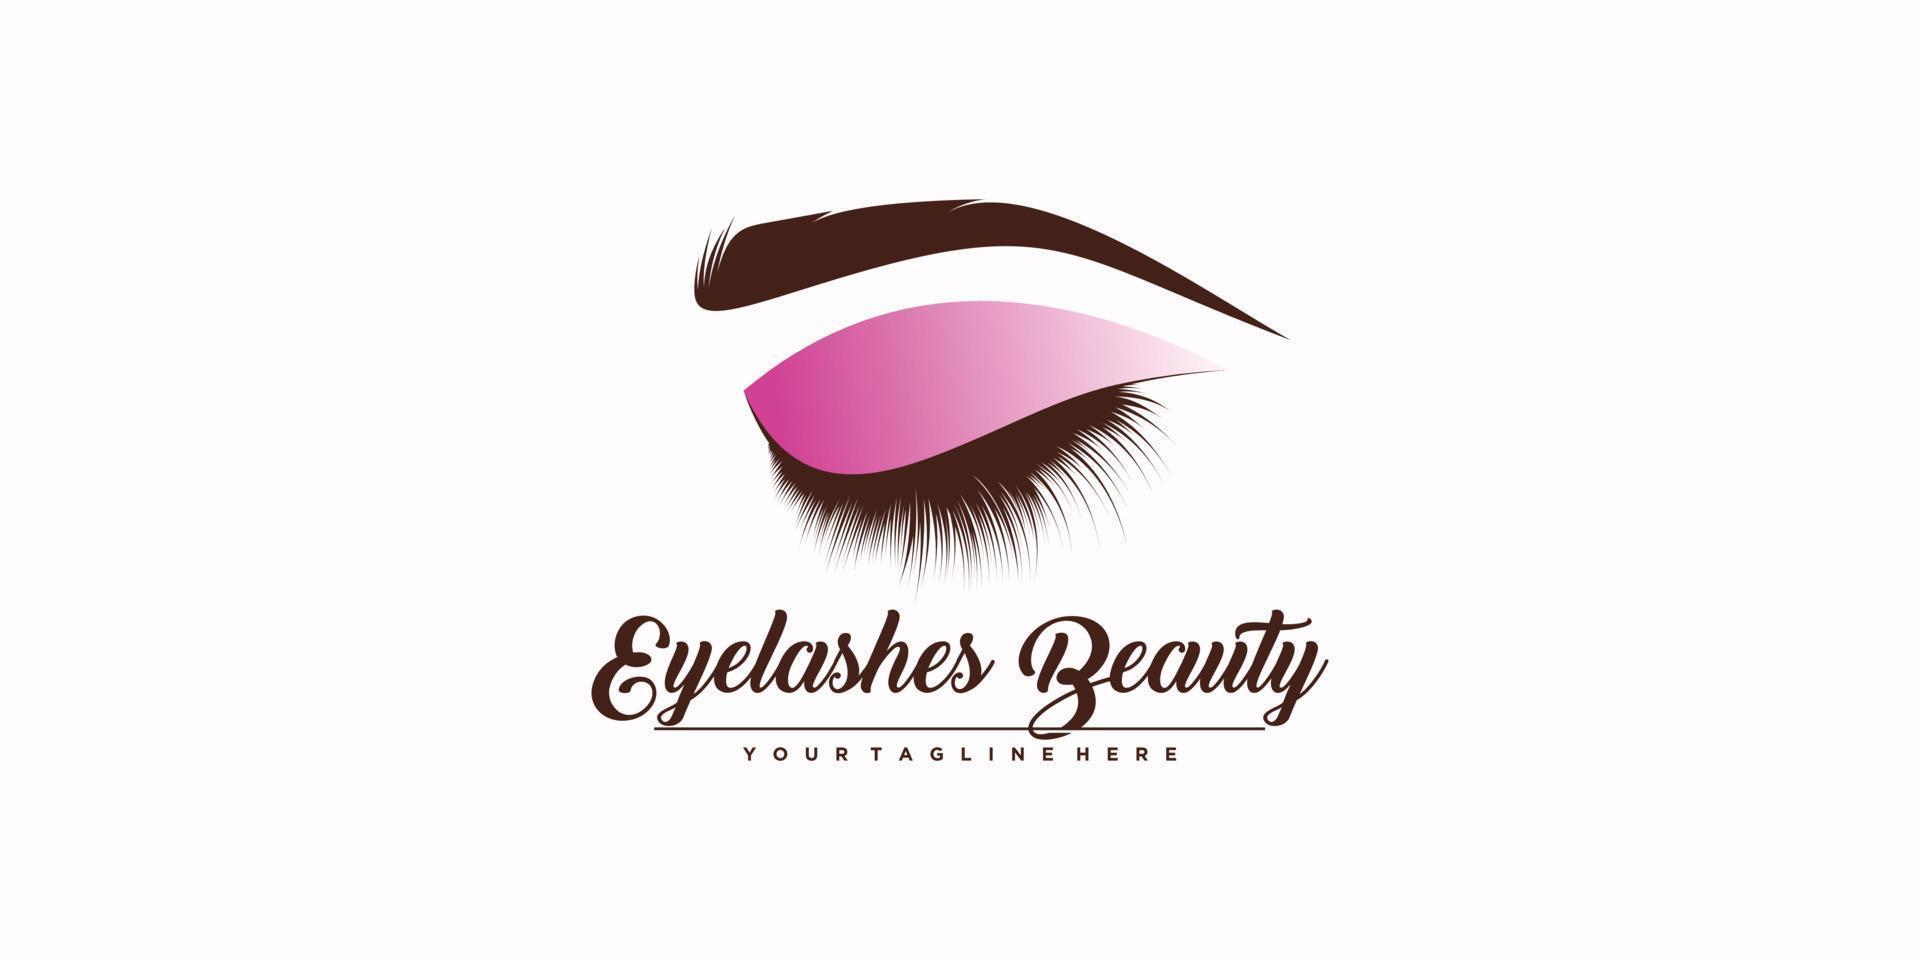 Eyelashes logo design with modern abstract concept Premium Vector